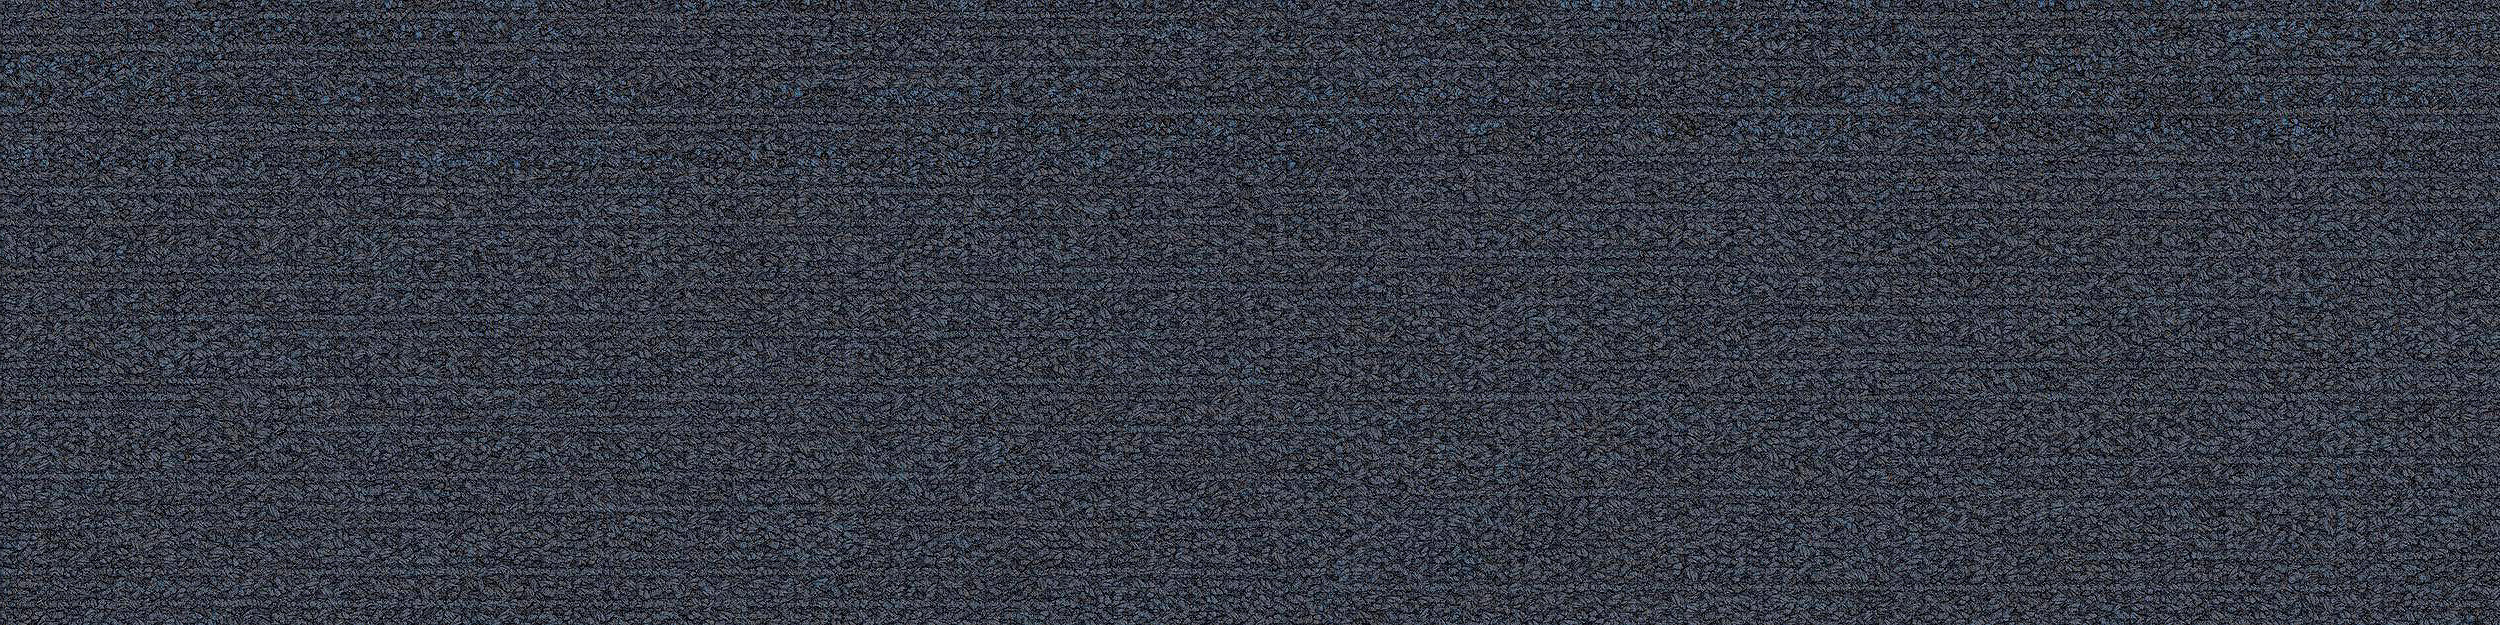 Harmonize Carpet Tile in Cobalt image number 11